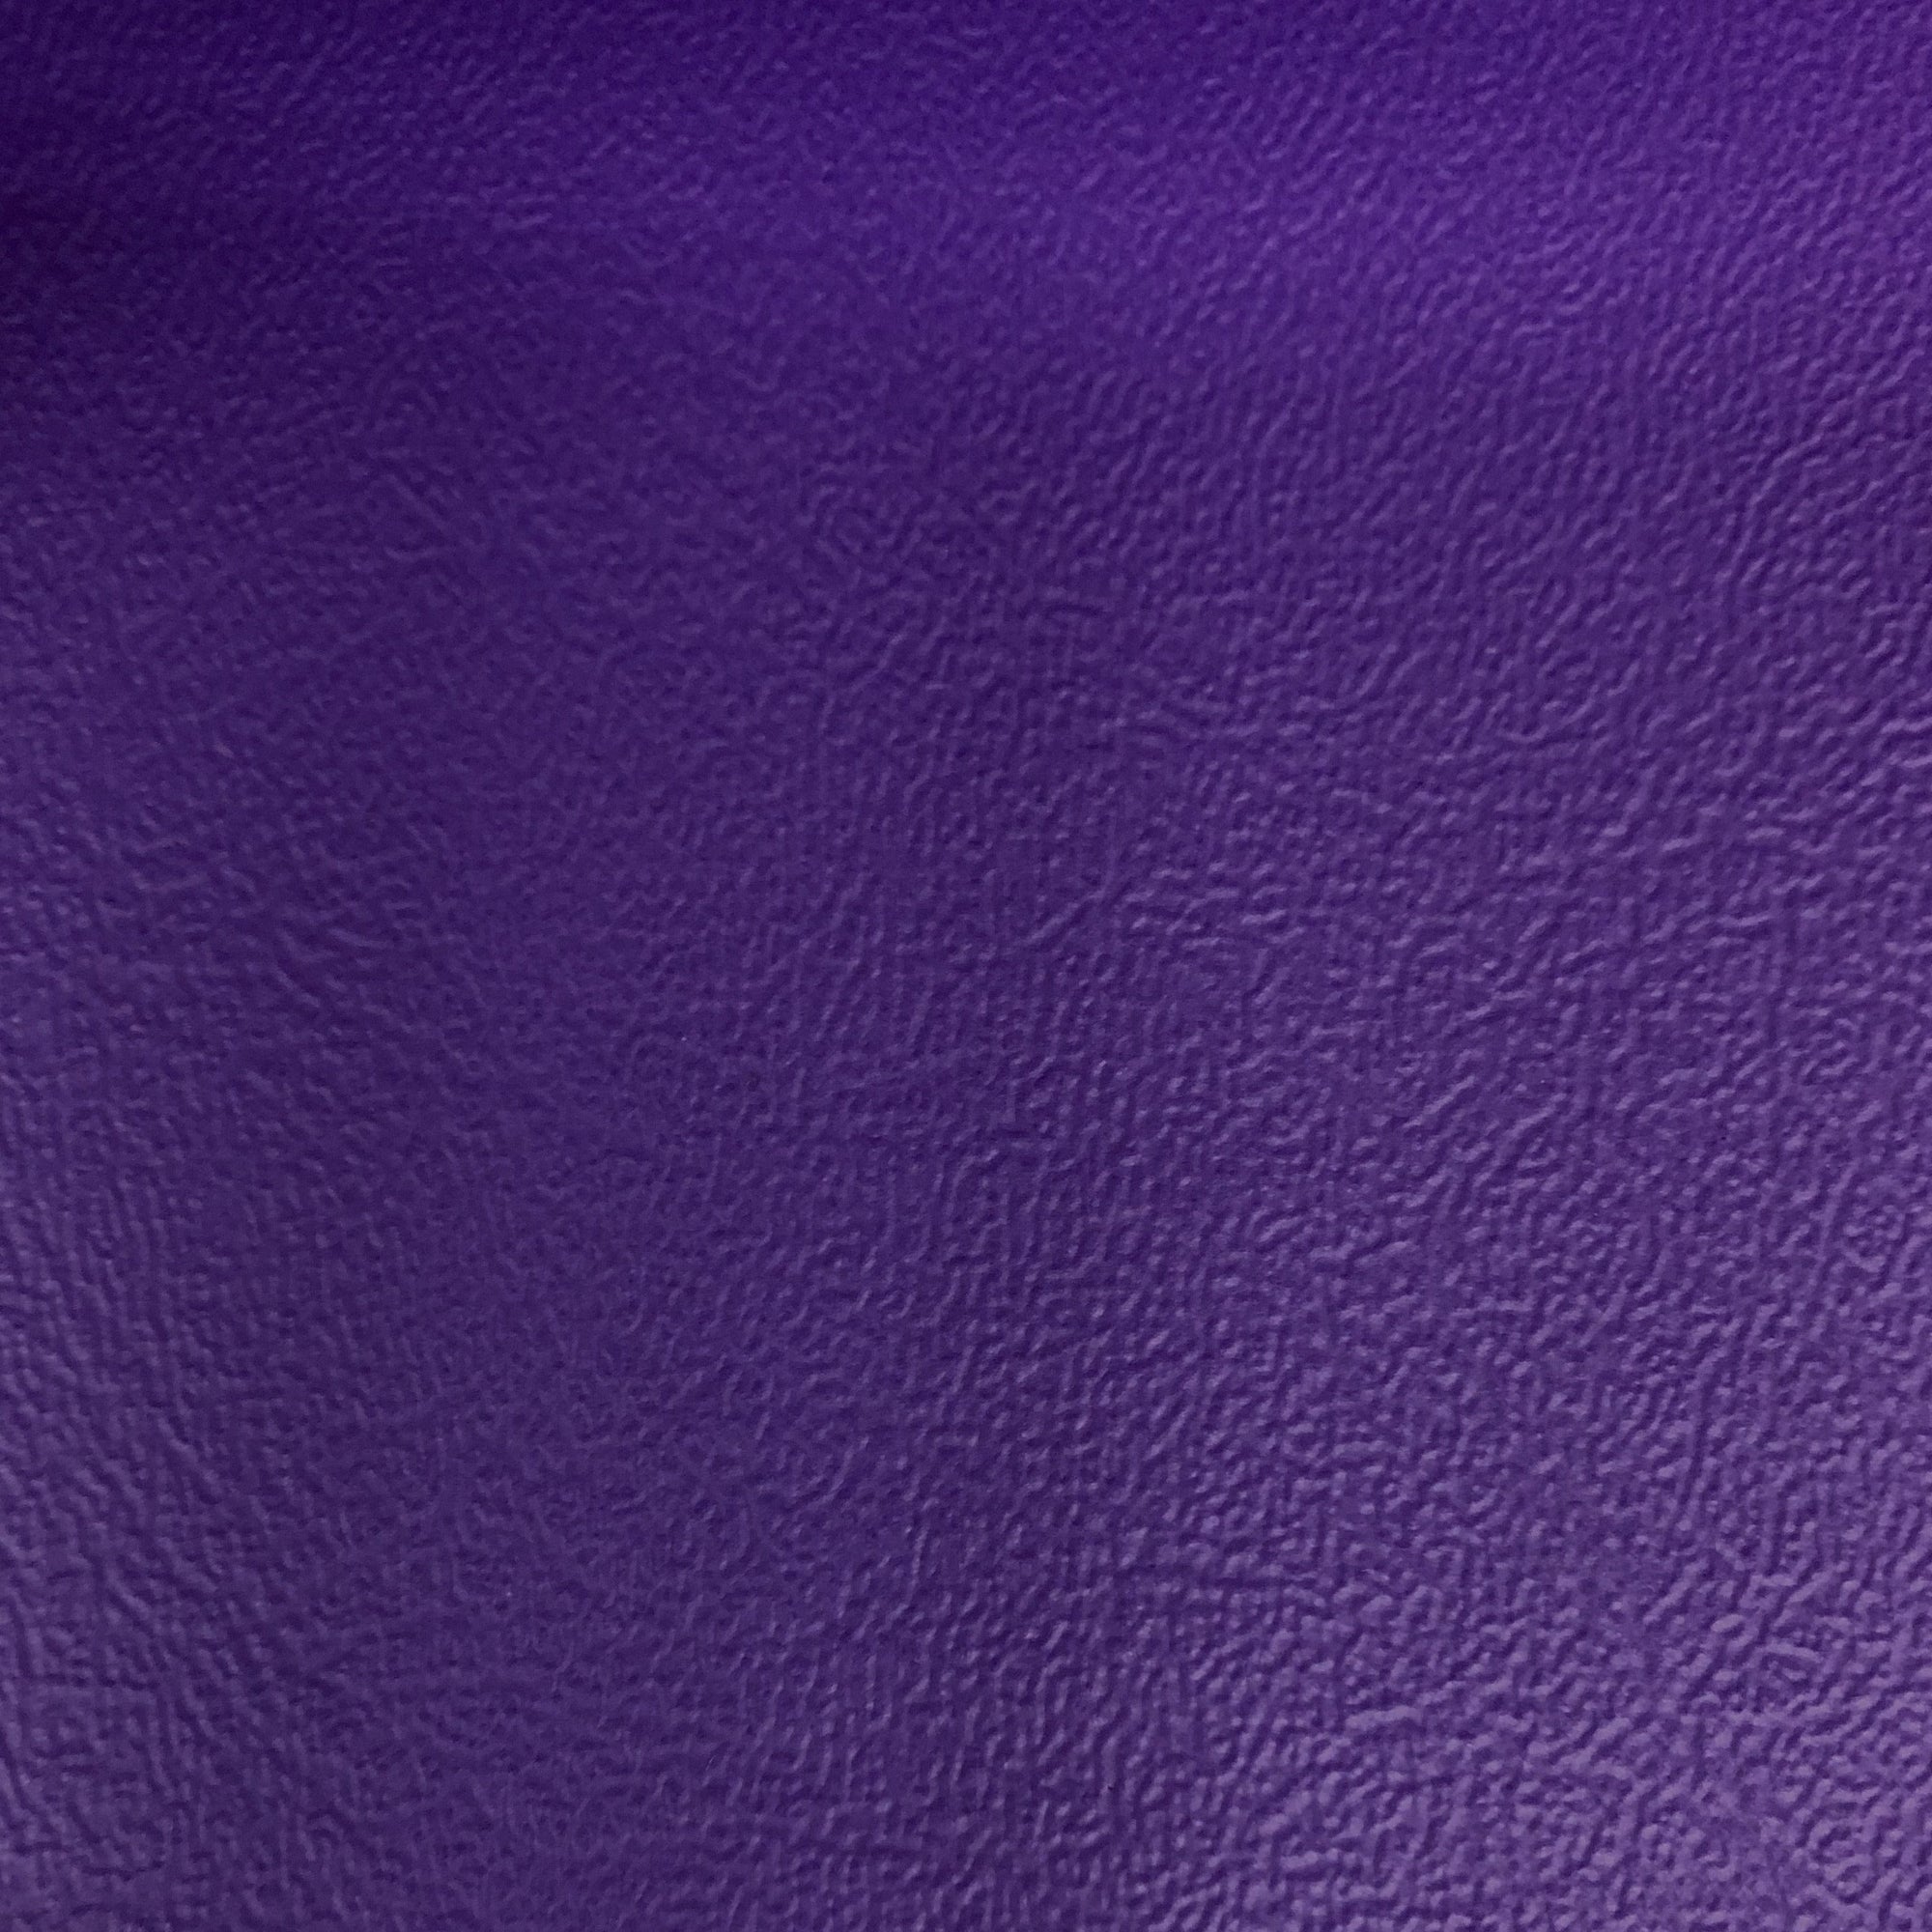 Eggplant Purple Blazer Heavy Duty Vinyl Fabric - Fashion Fabrics Los Angeles 